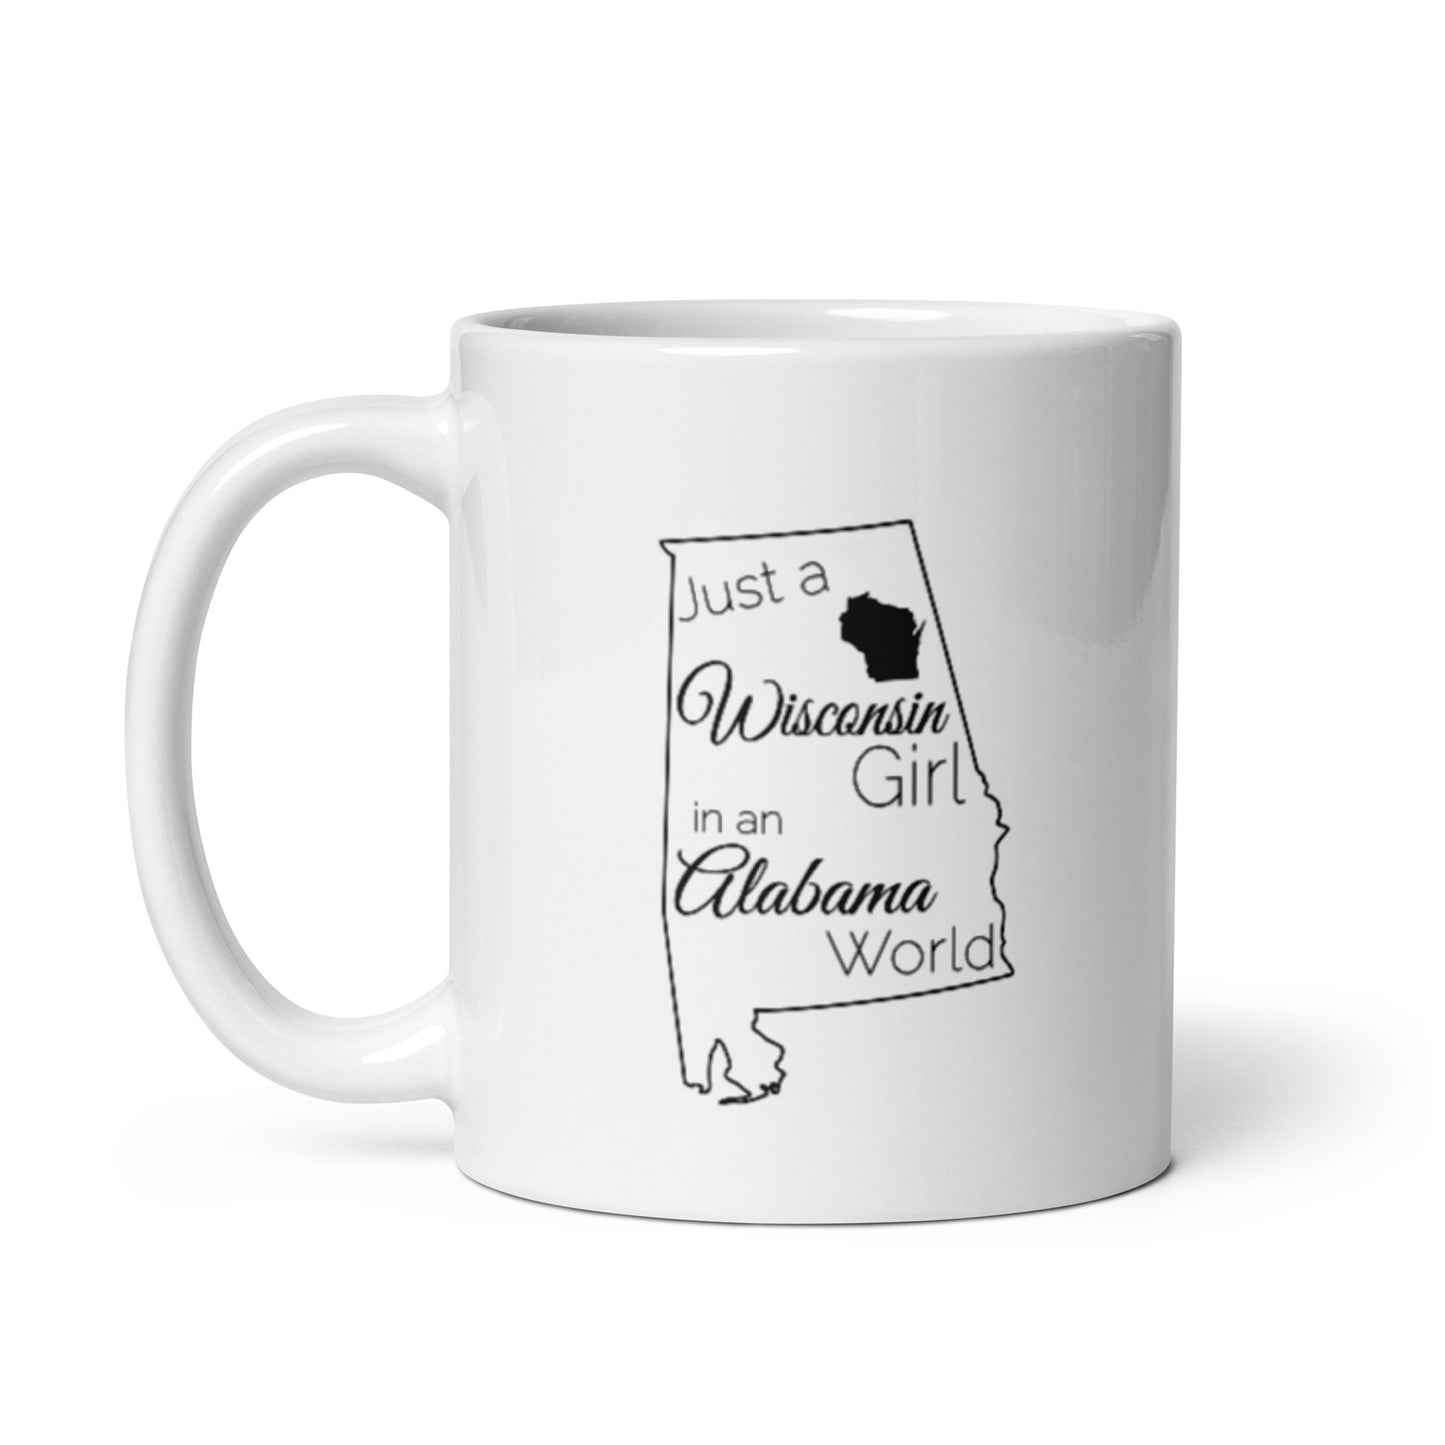 Just a Wisconsin Girl in an Alabama World White glossy mug